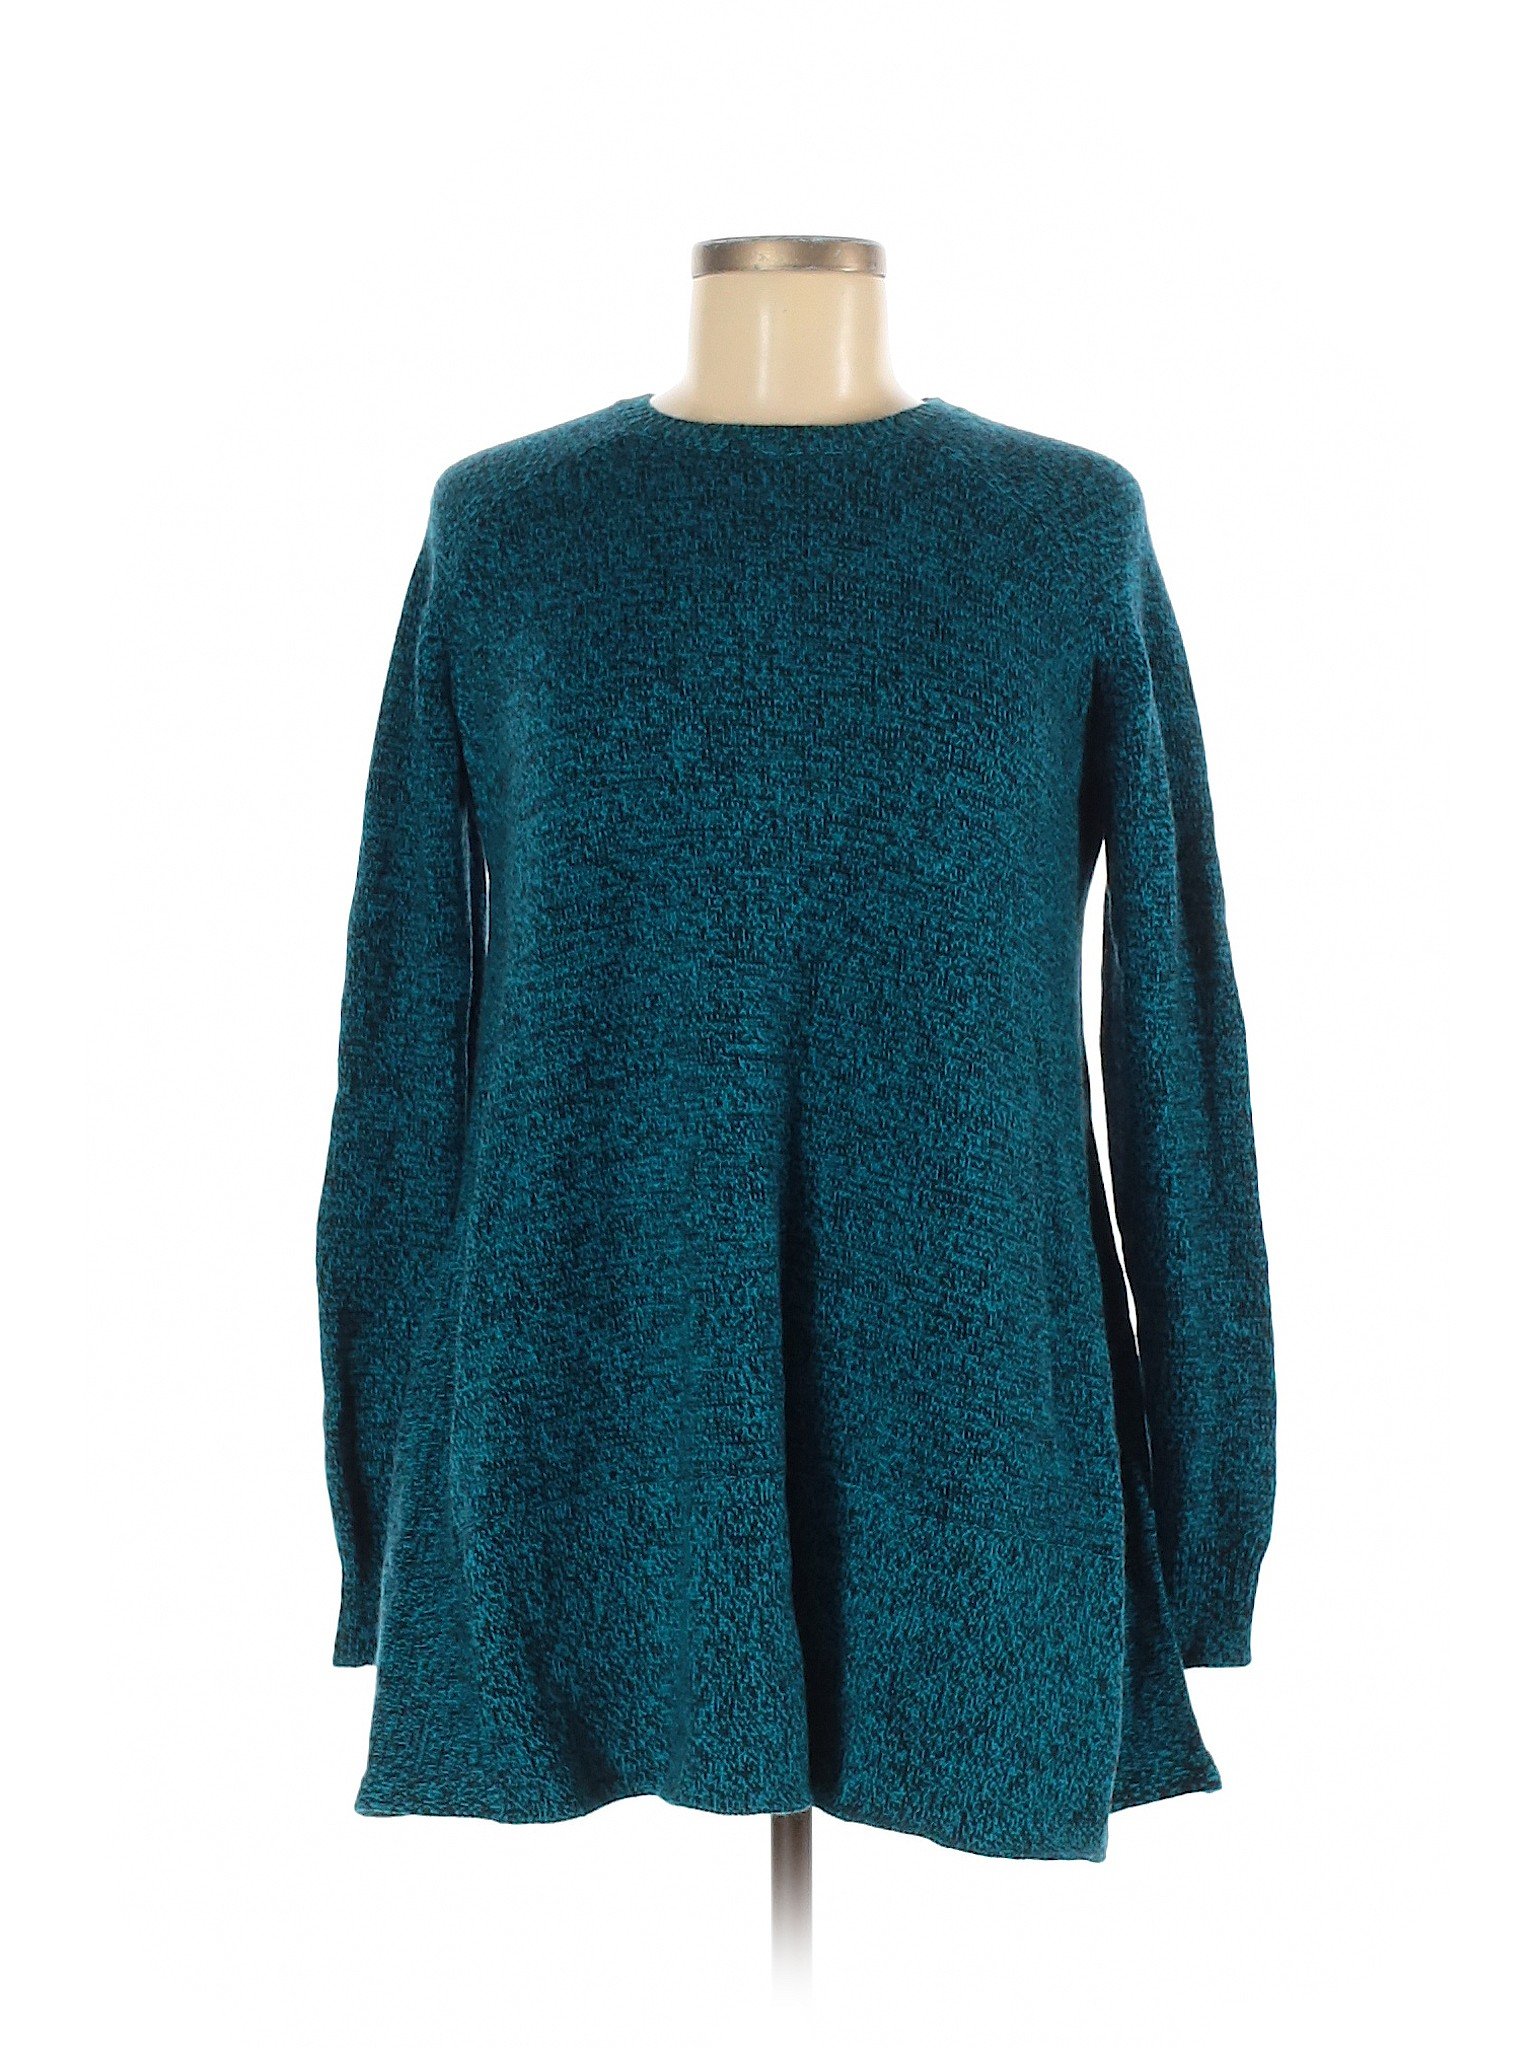 Christian Dior Women Green Pullover Sweater 4 | eBay